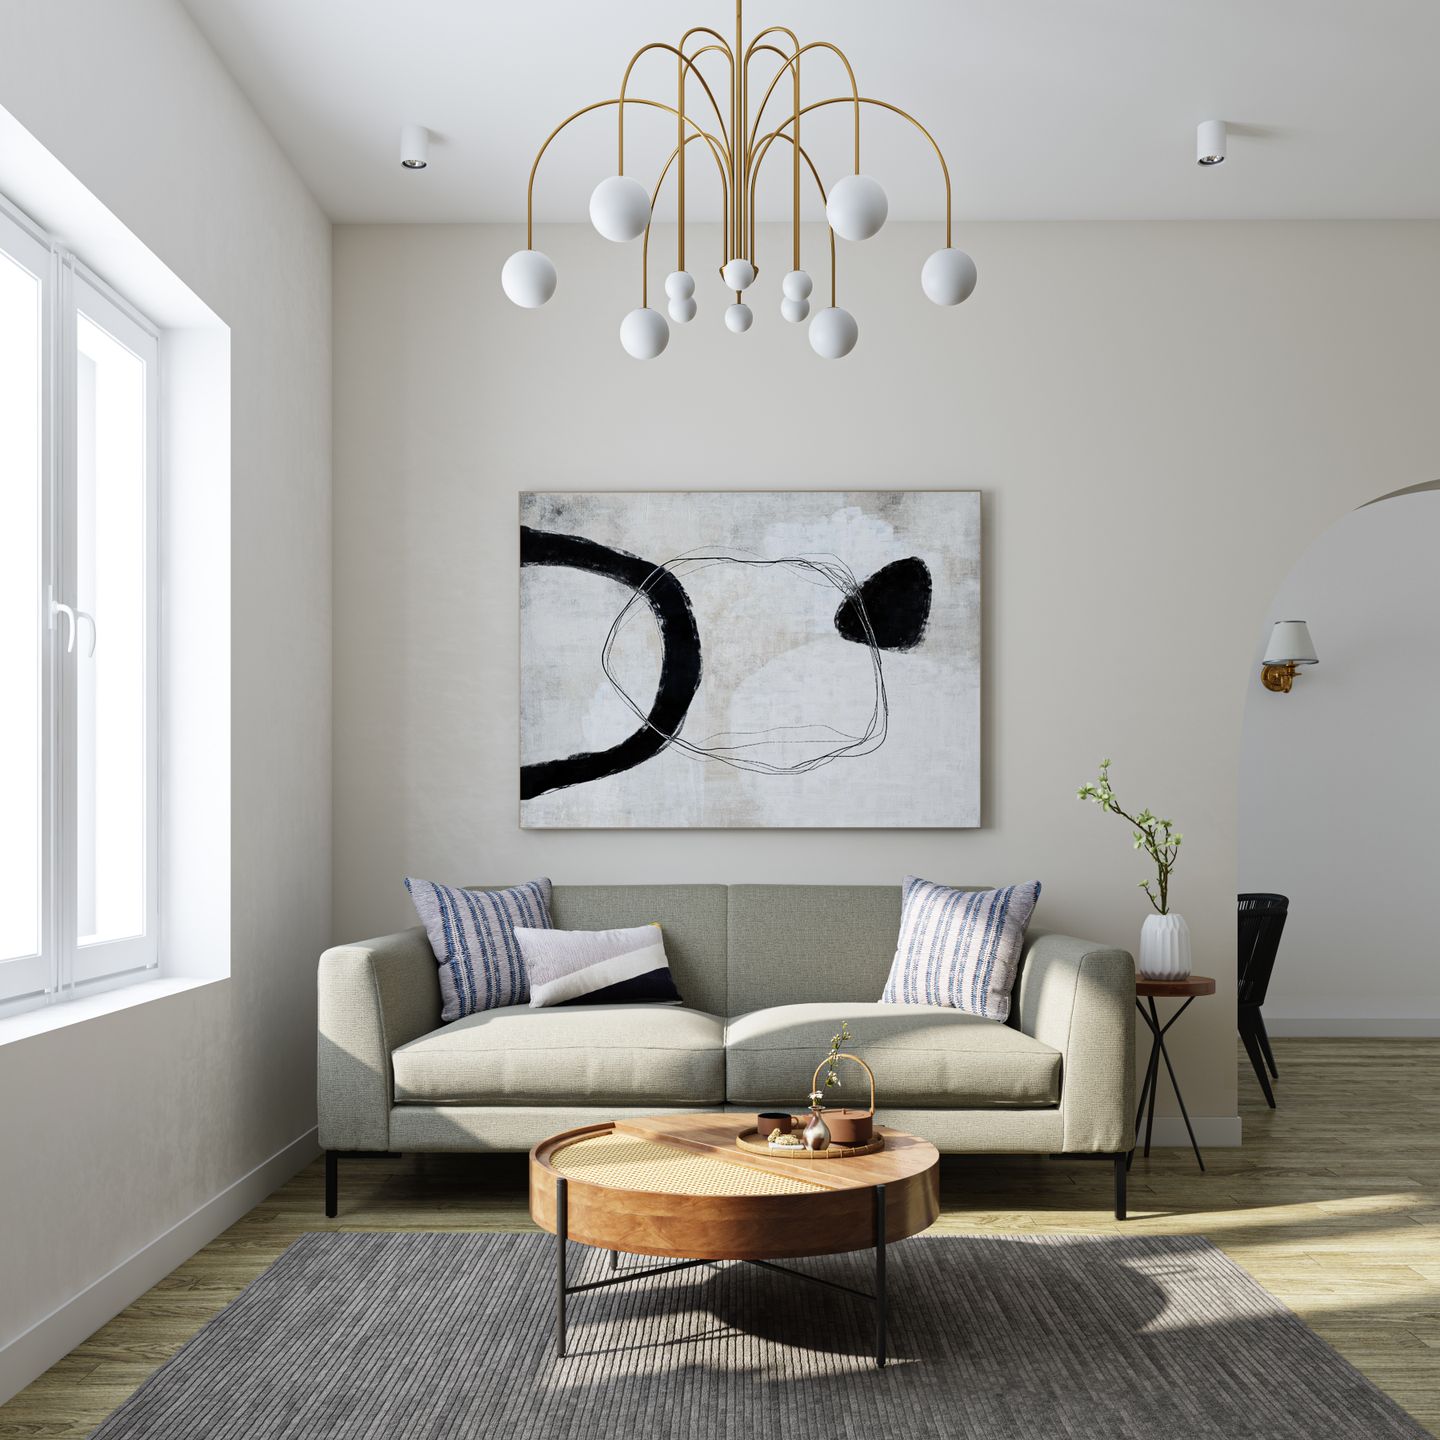 Compact Sized Convenient Living Room Design | Livspace